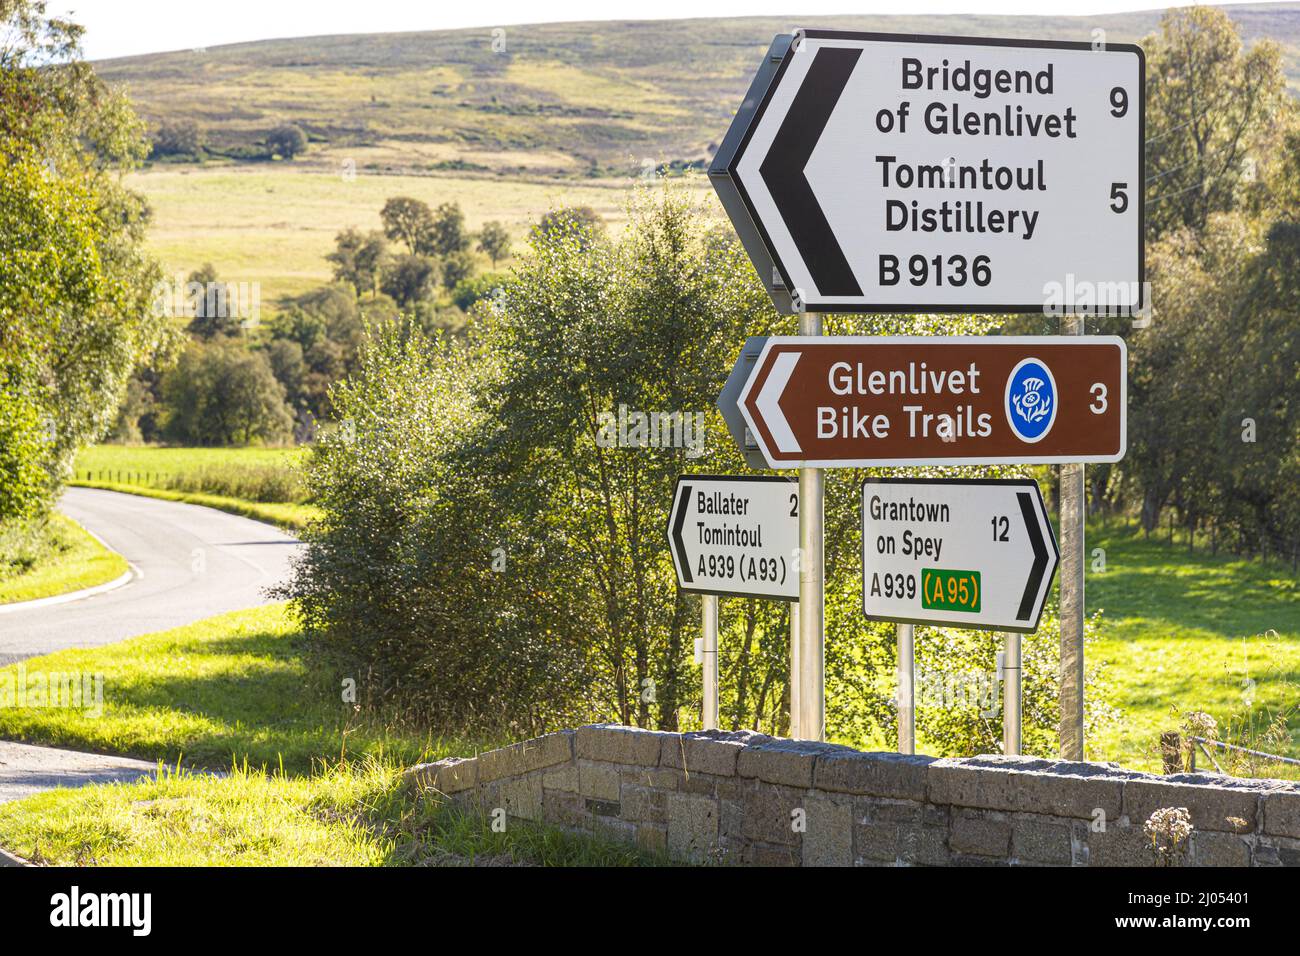 Sign for Glenlivet Bike Trails and Tomintoul Distillery at Bridge of Avon, near Tomintoul, Moray, Scotland UK. Stock Photo